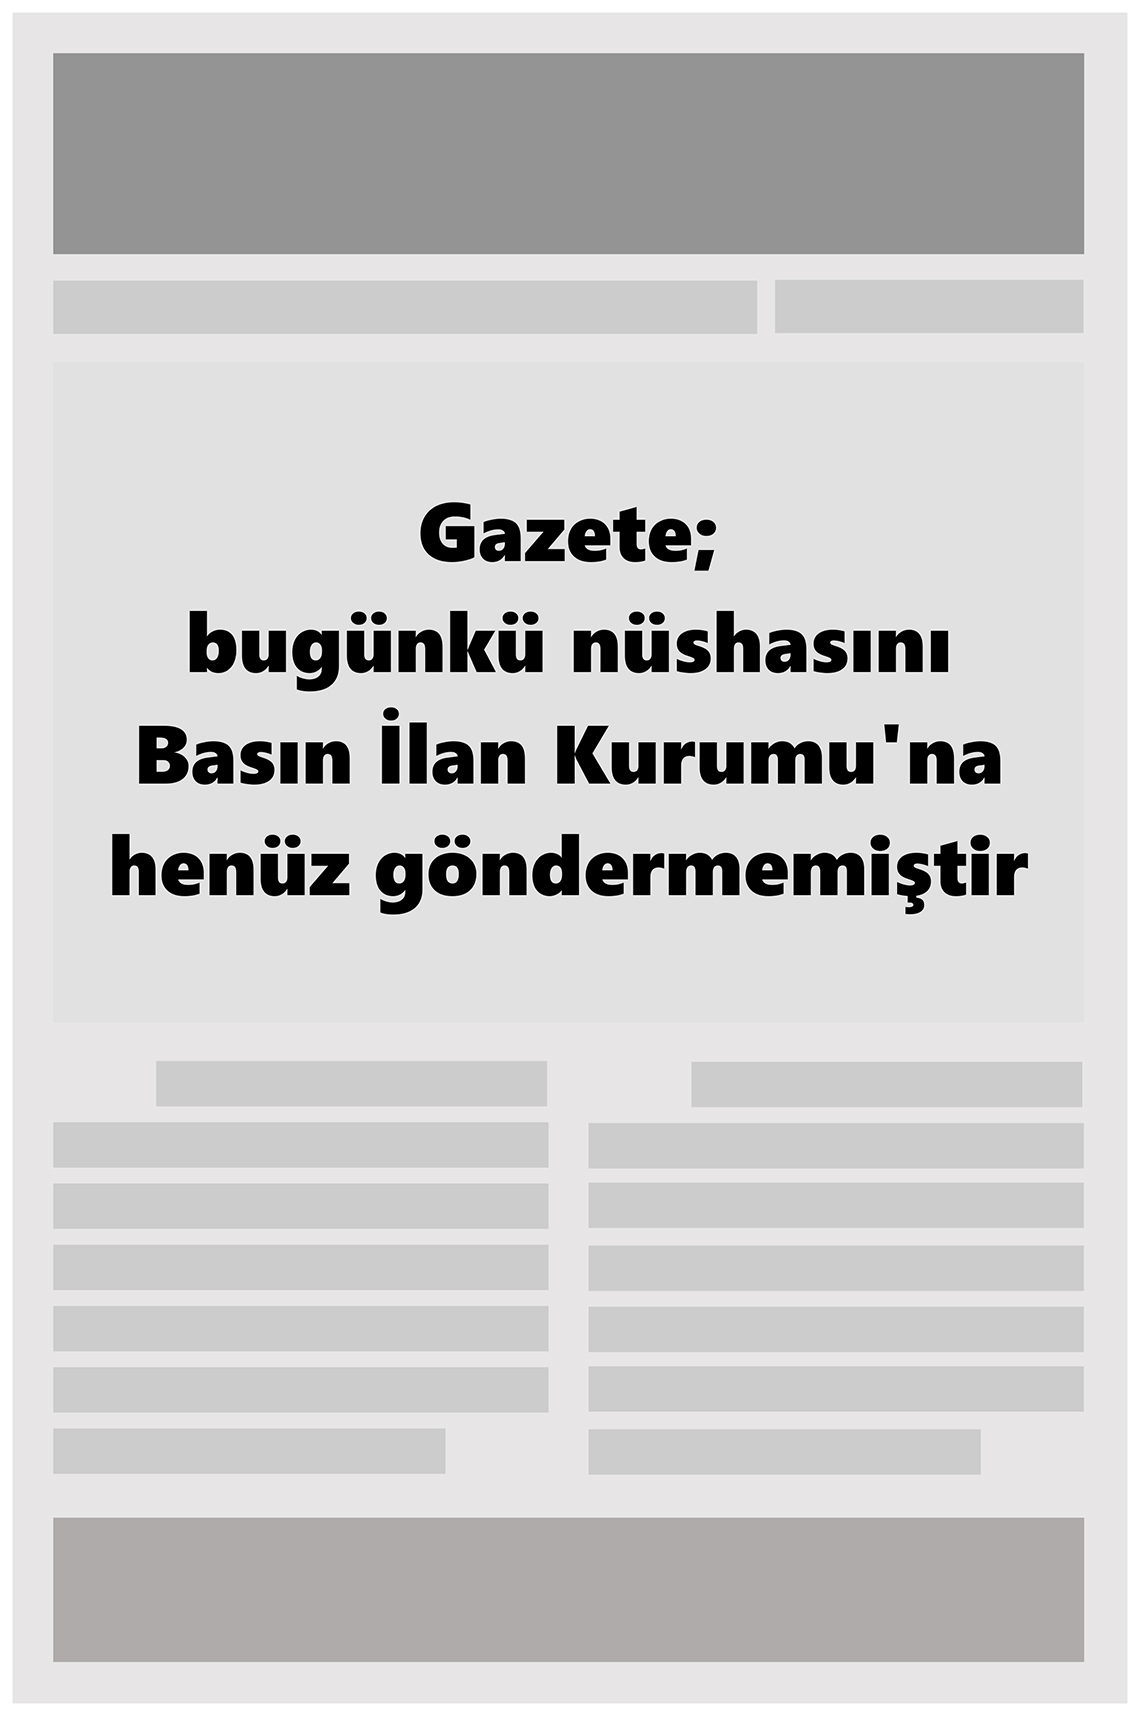 20 Nisan 2024 Of Havadis Gazete Manşeti